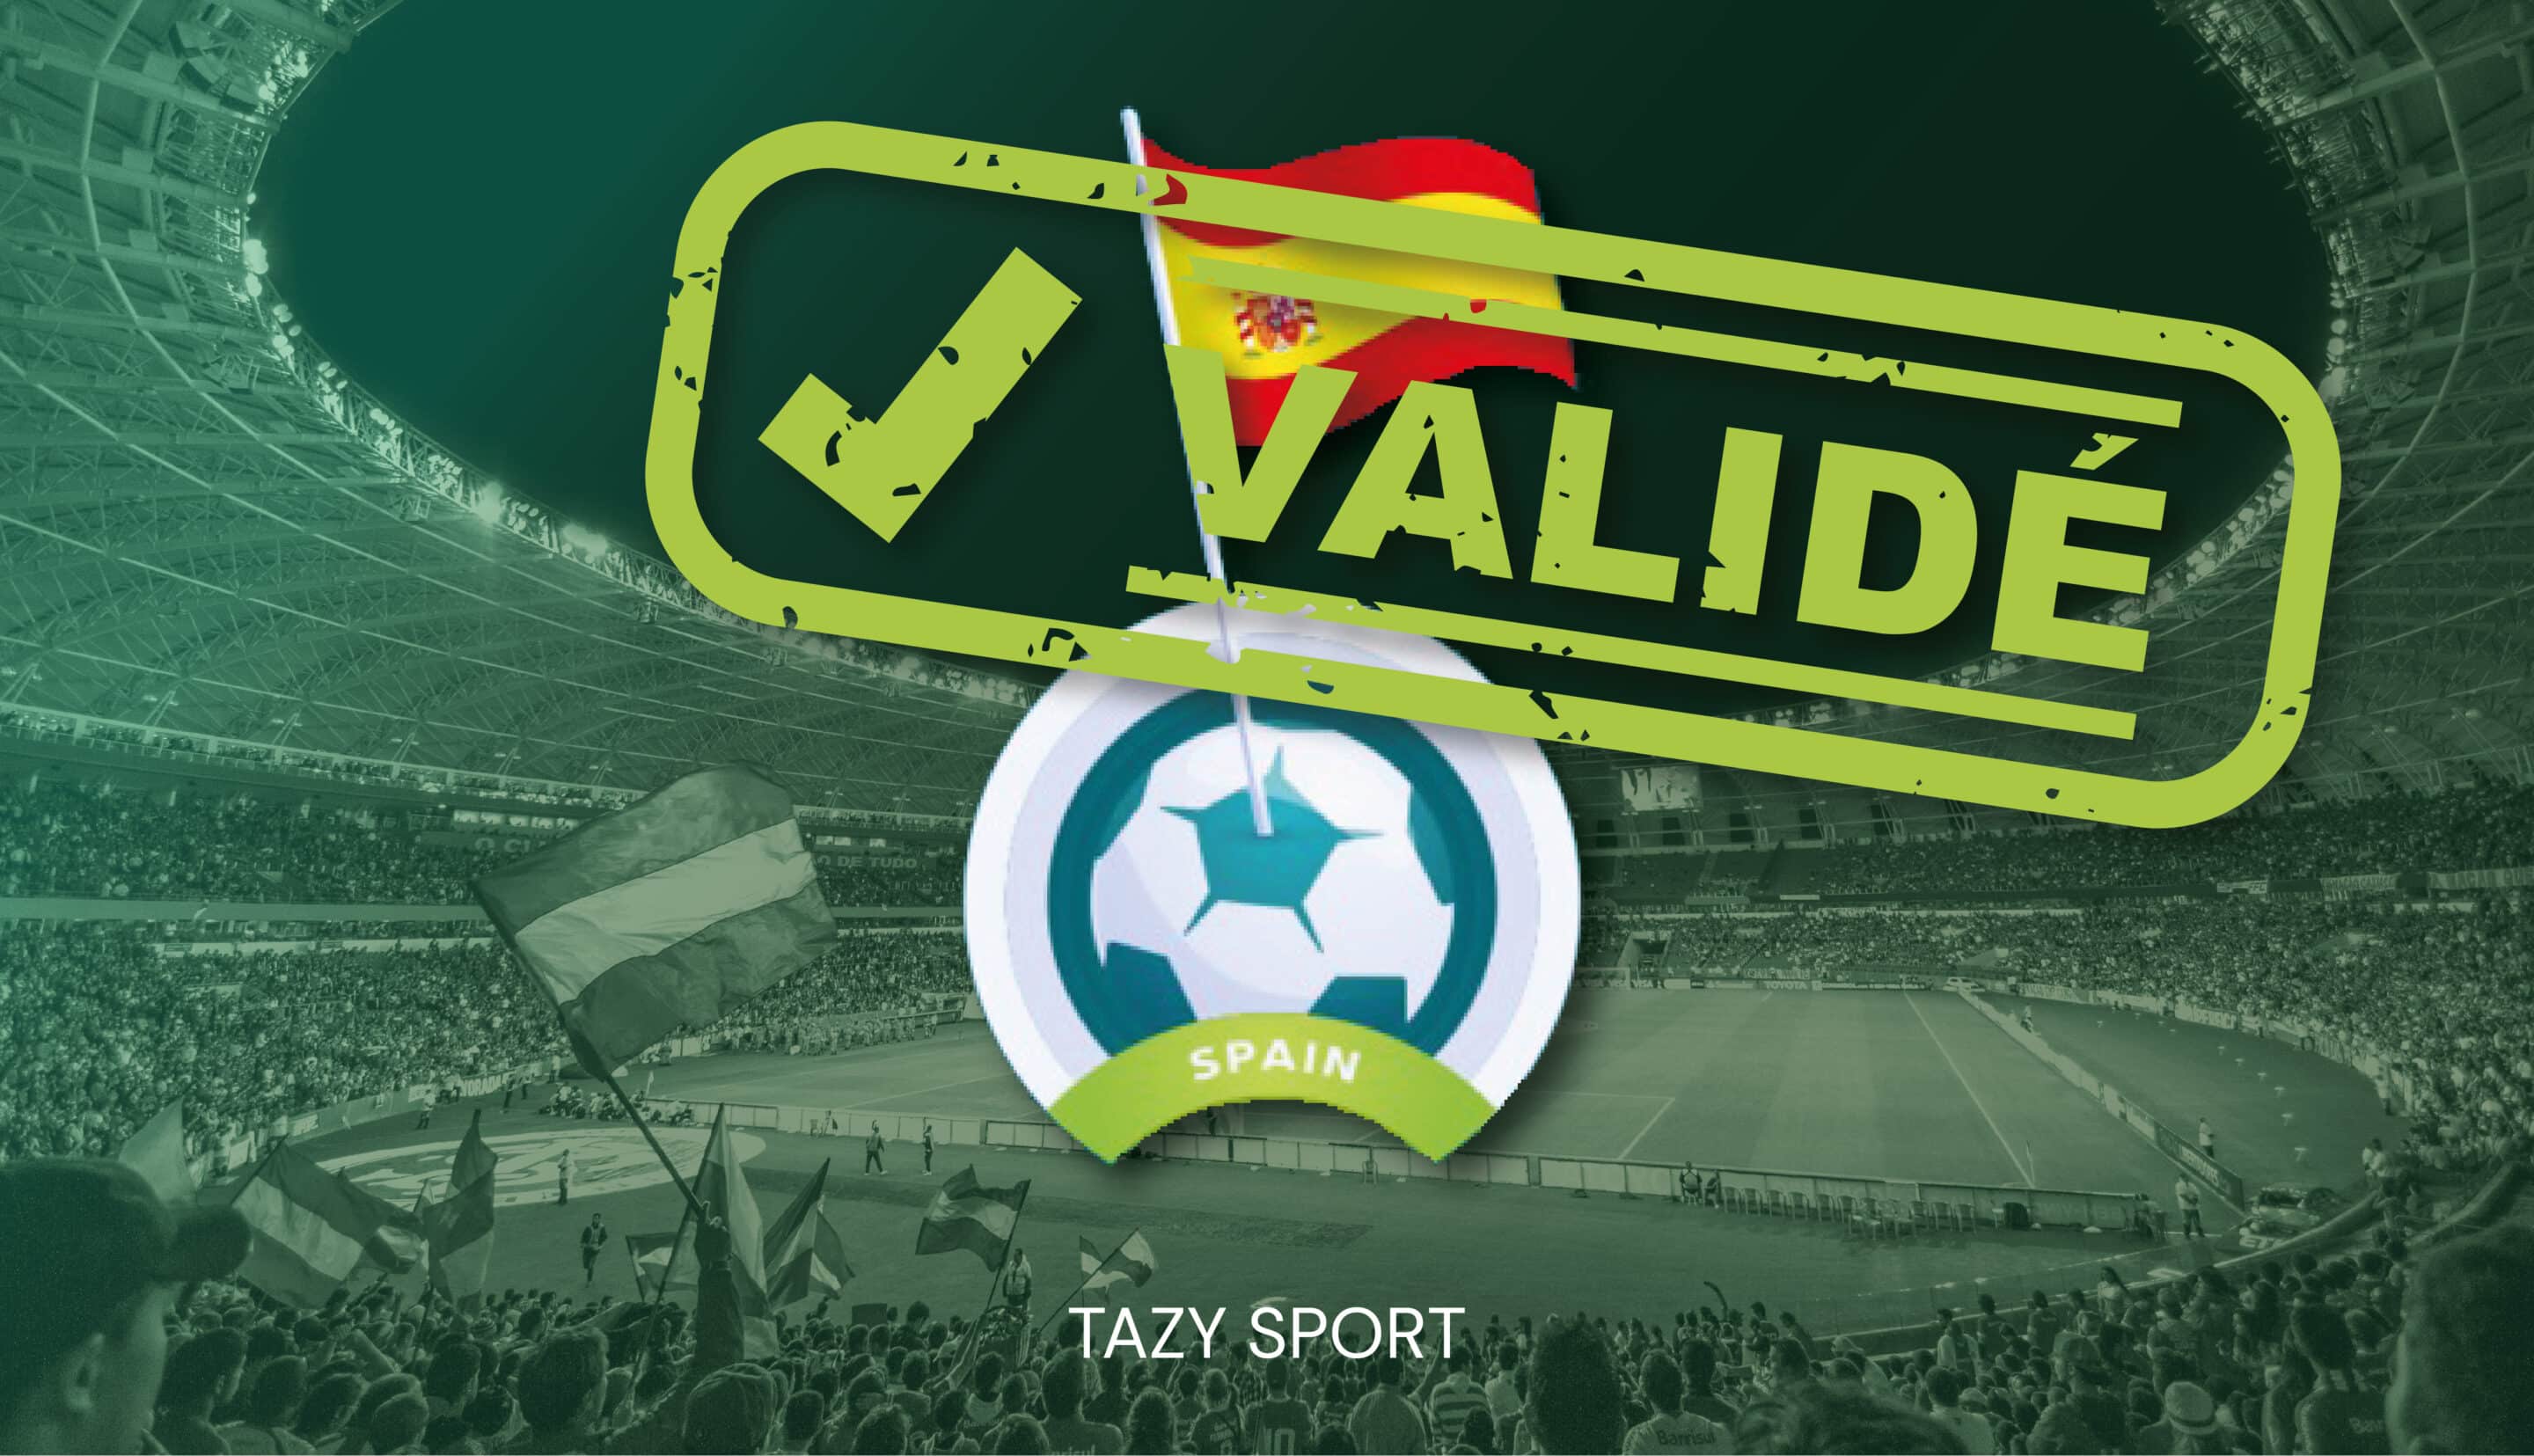 Pronostic football Espagne Validé - Tazy Sport